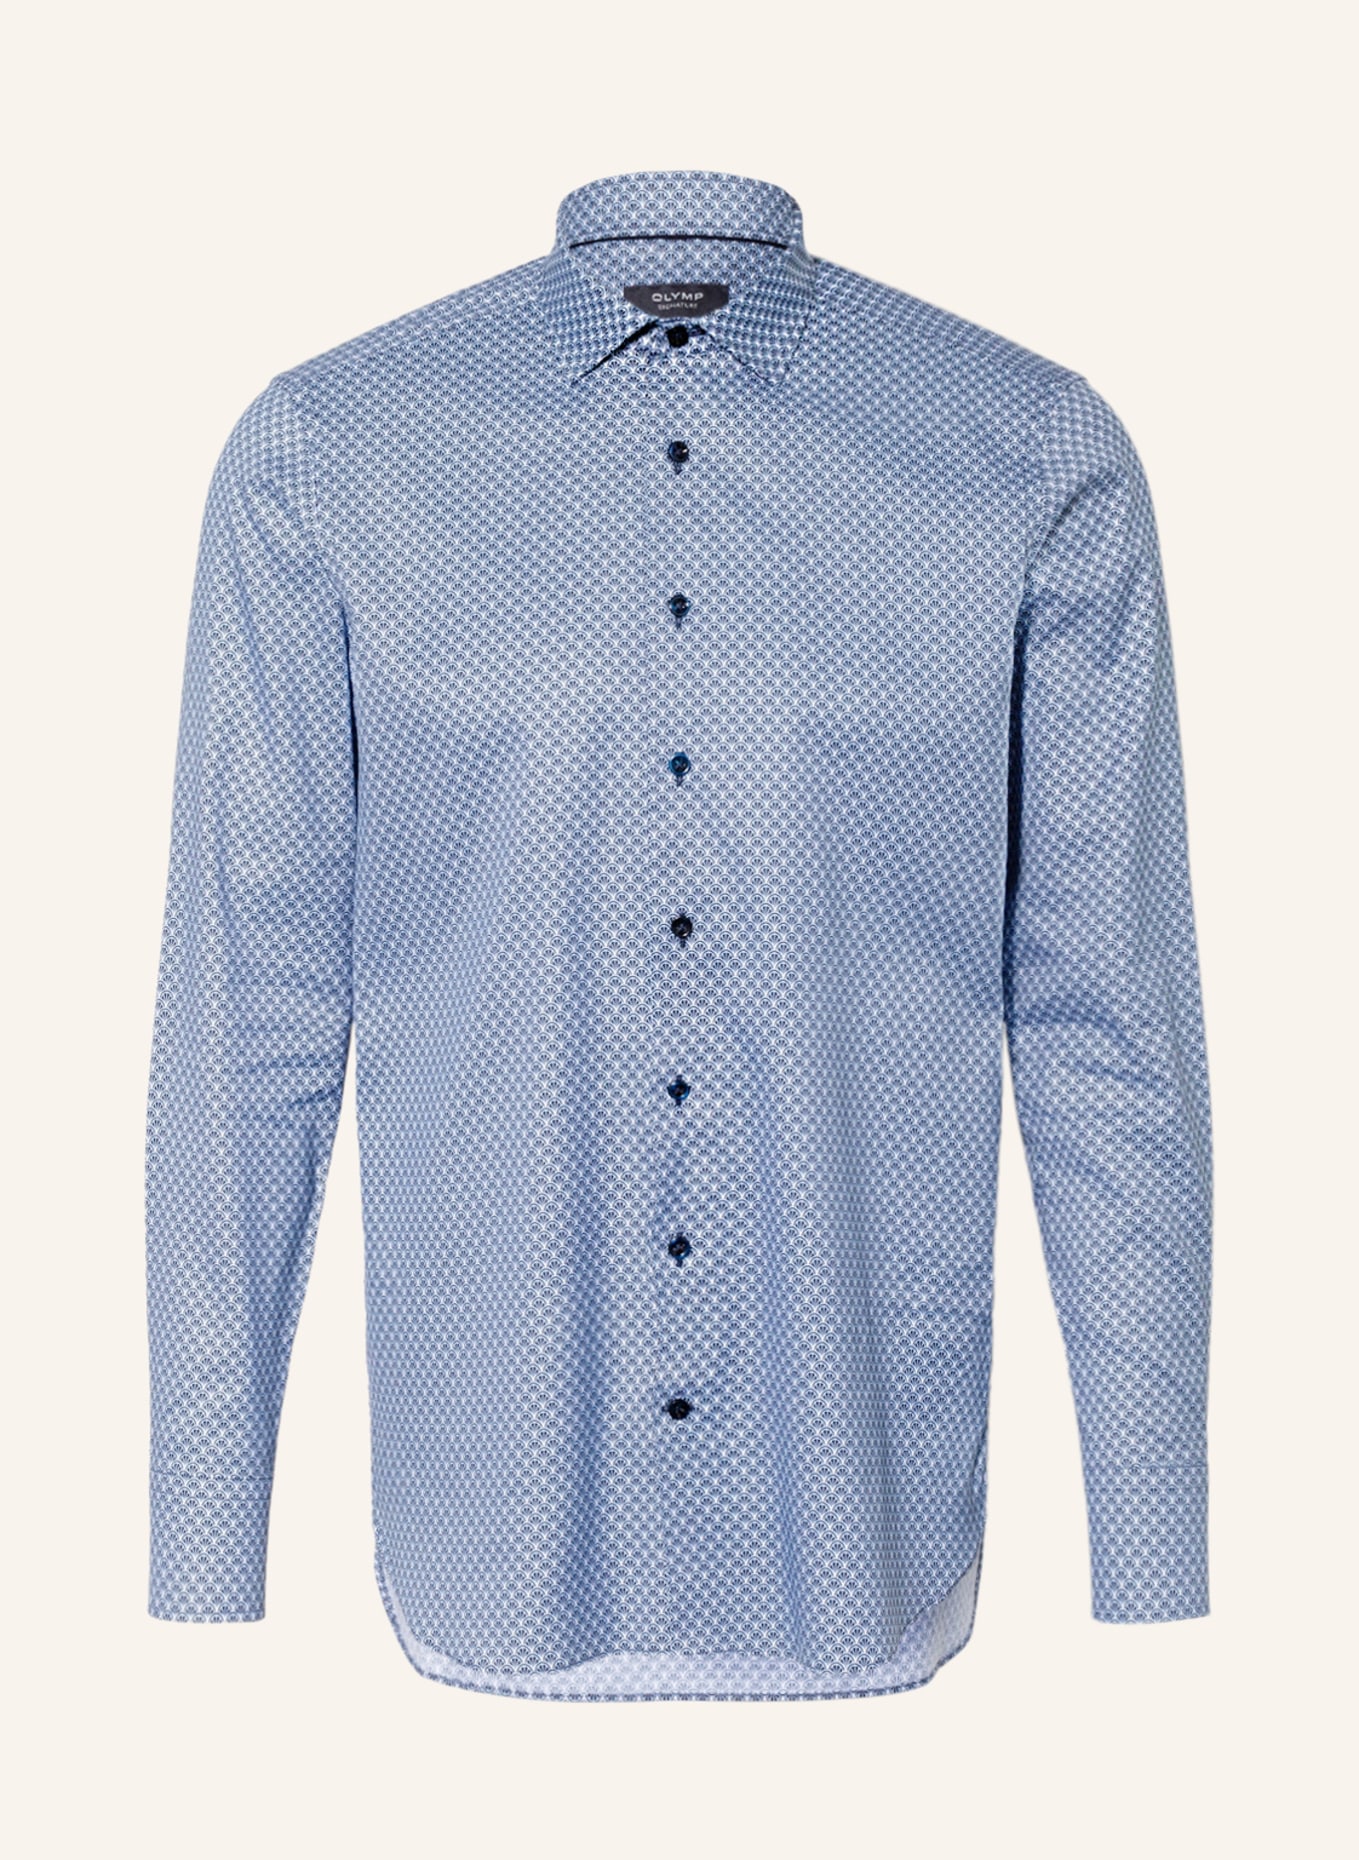 SIGNATURE OLYMP dunkelblau fit in Hemd blau/ tailored